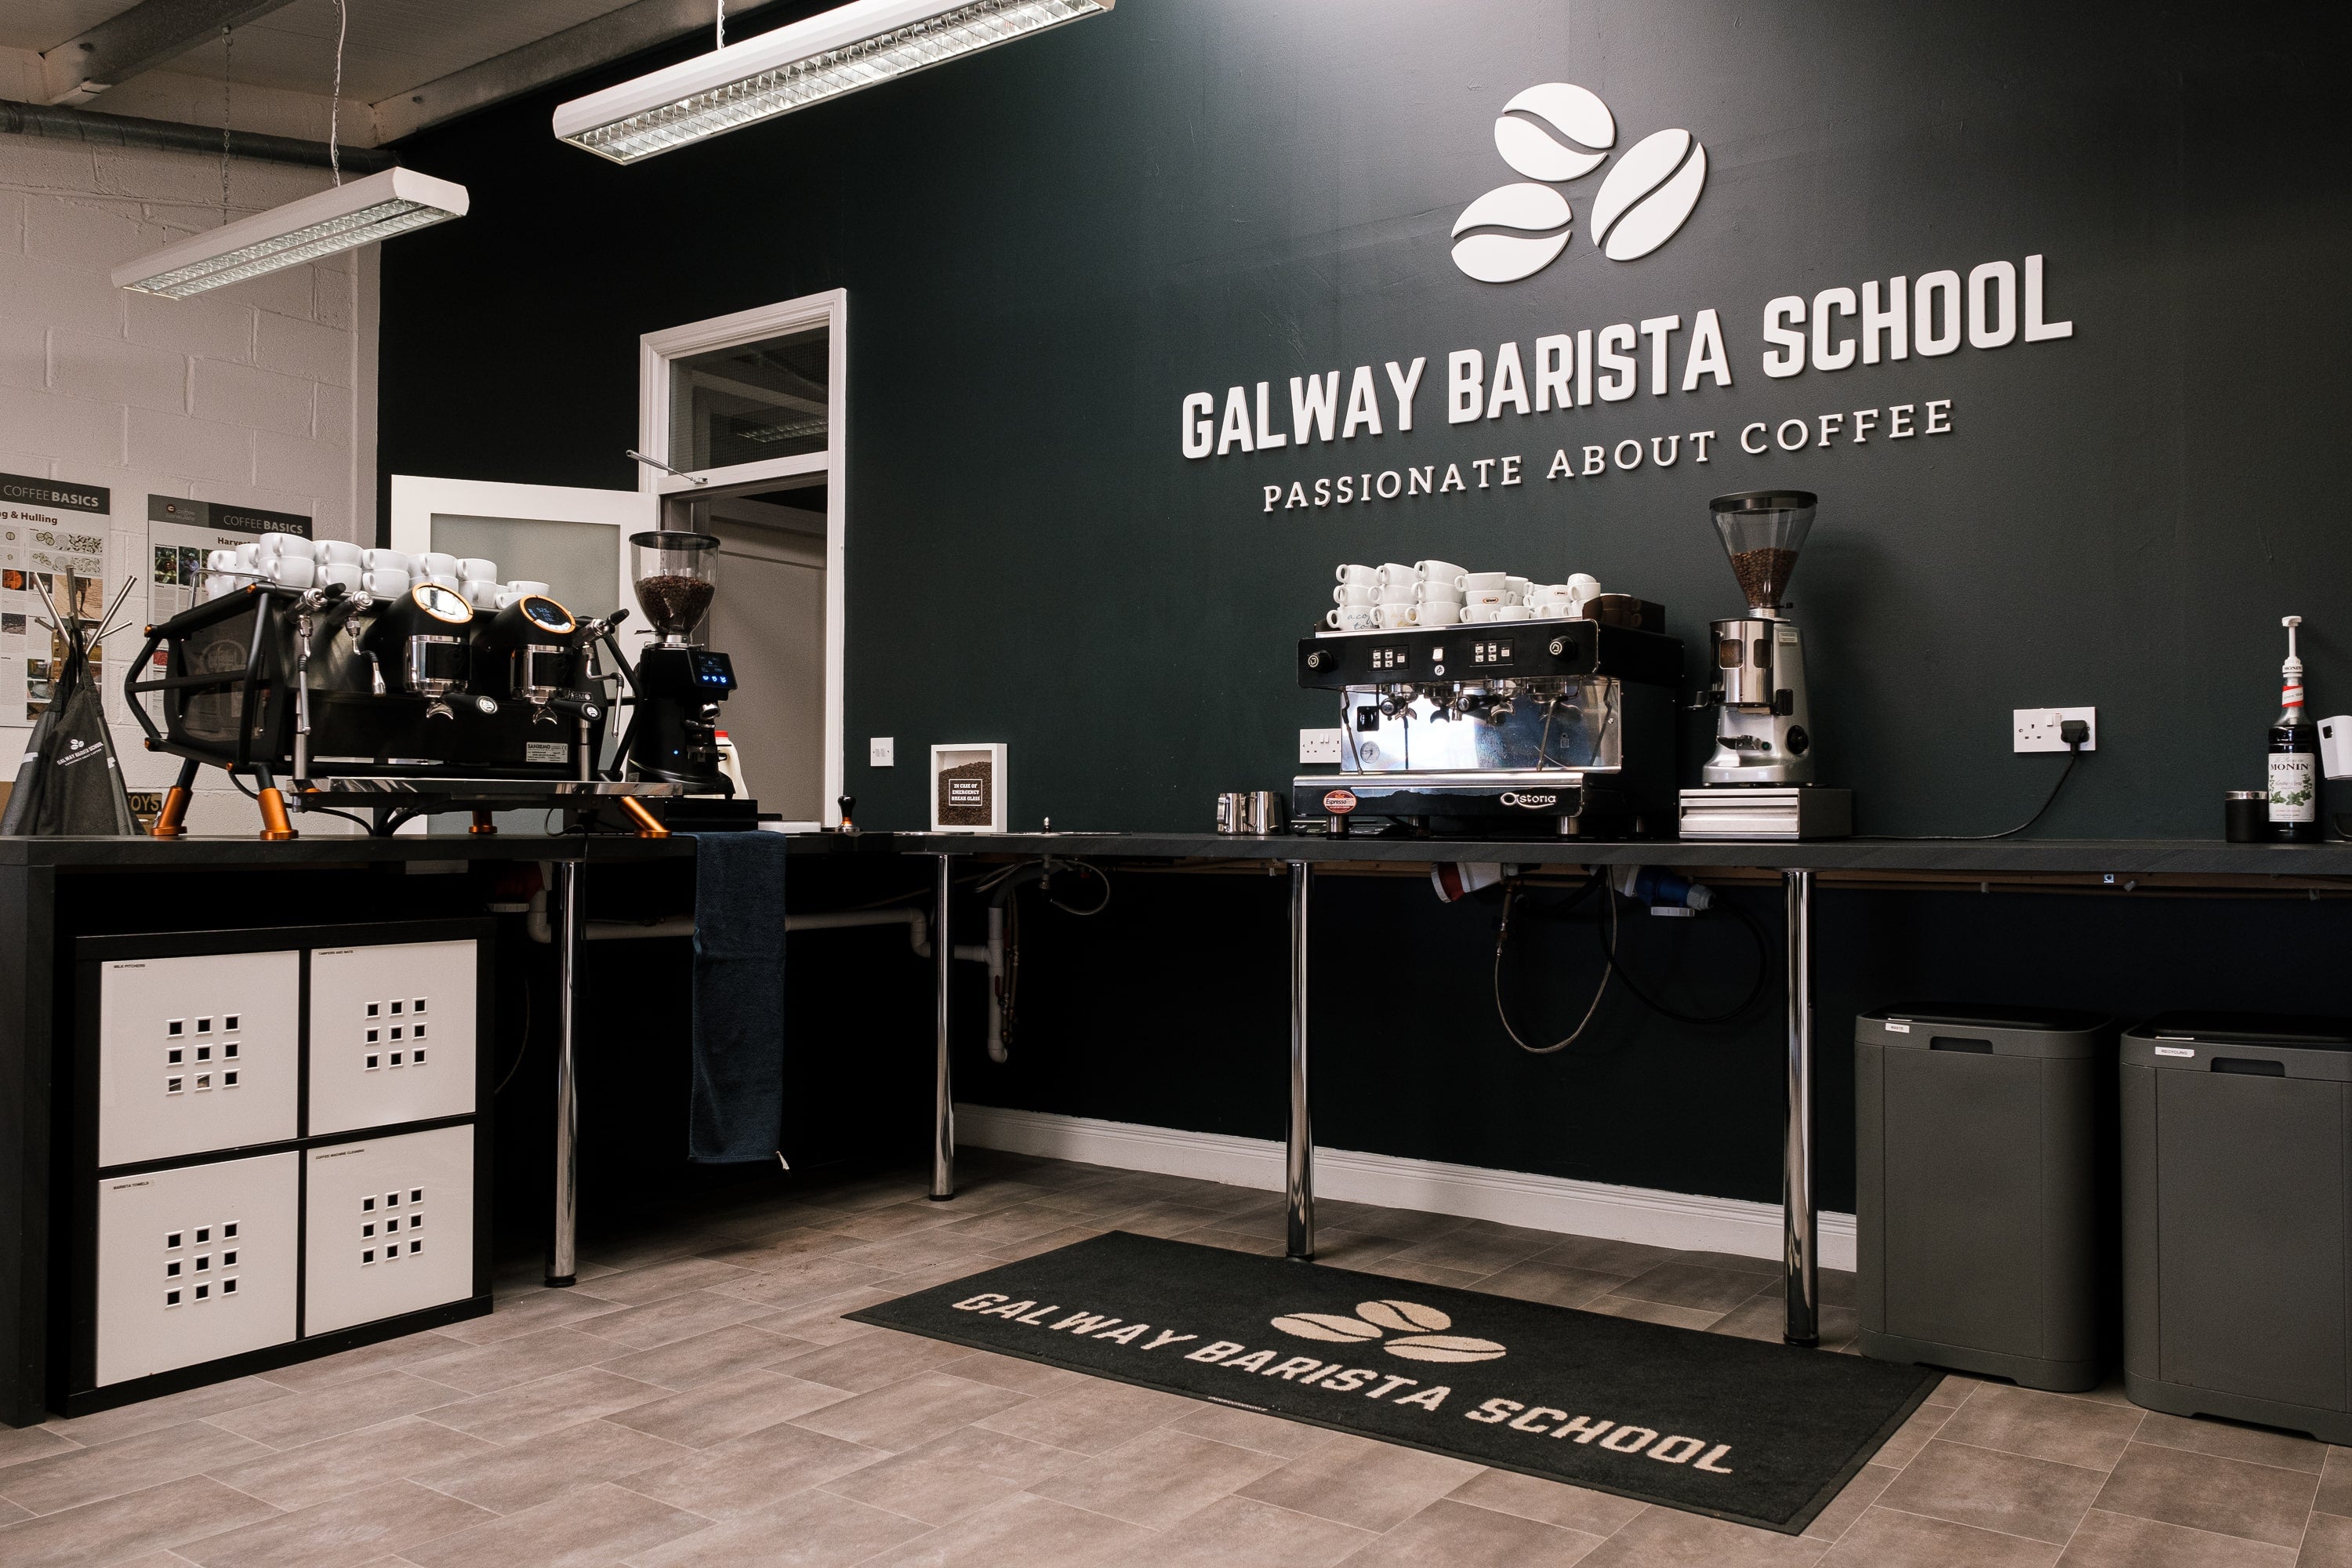 The Galway Barista School